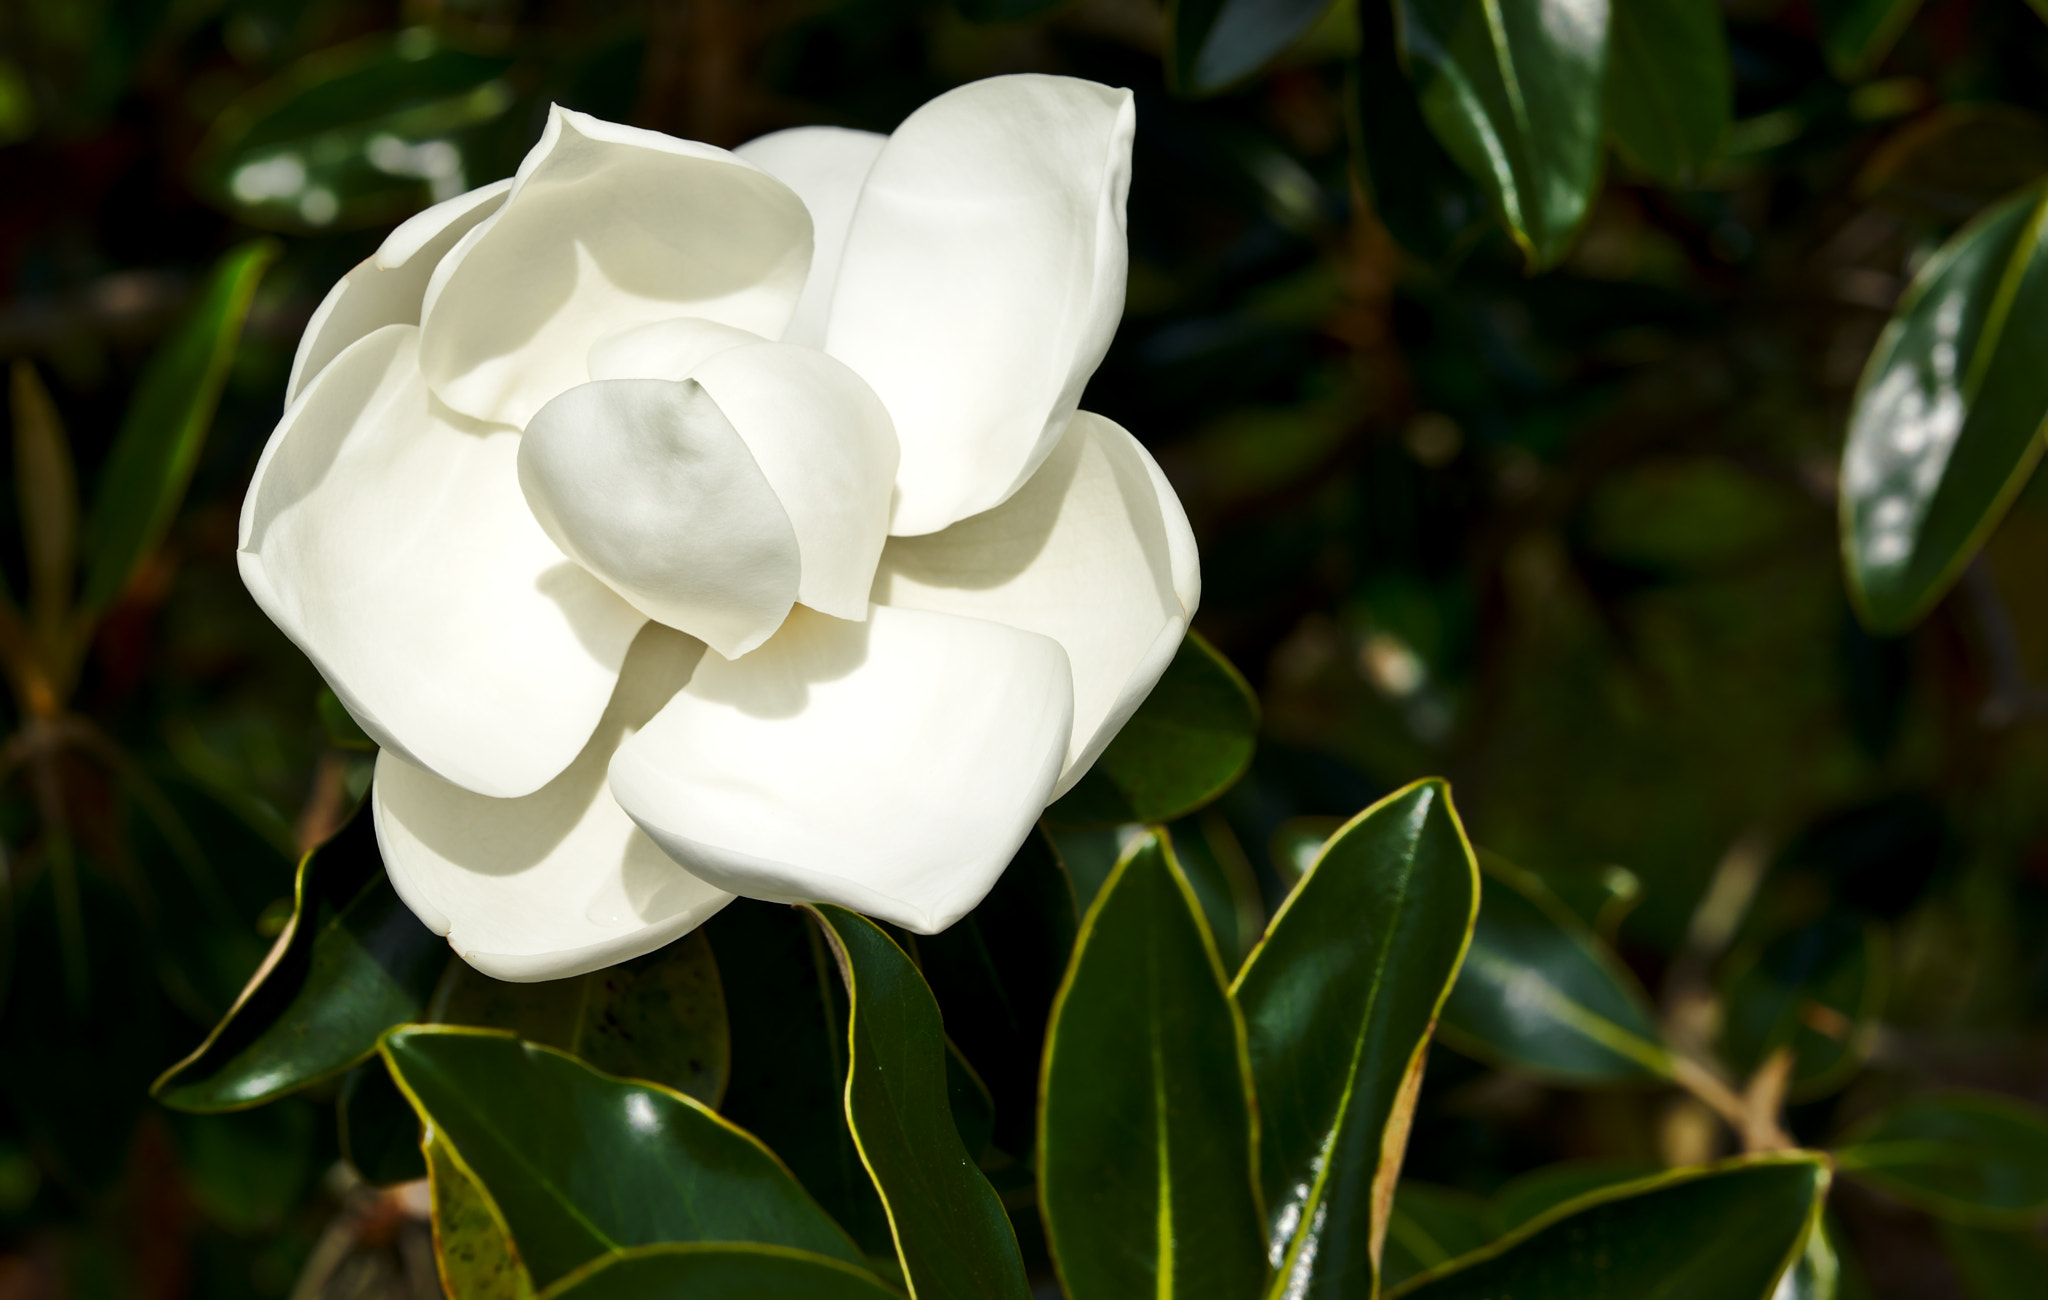 ZEISS Otus 85mm F1.4 sample photo. Flowering magnolia i photography